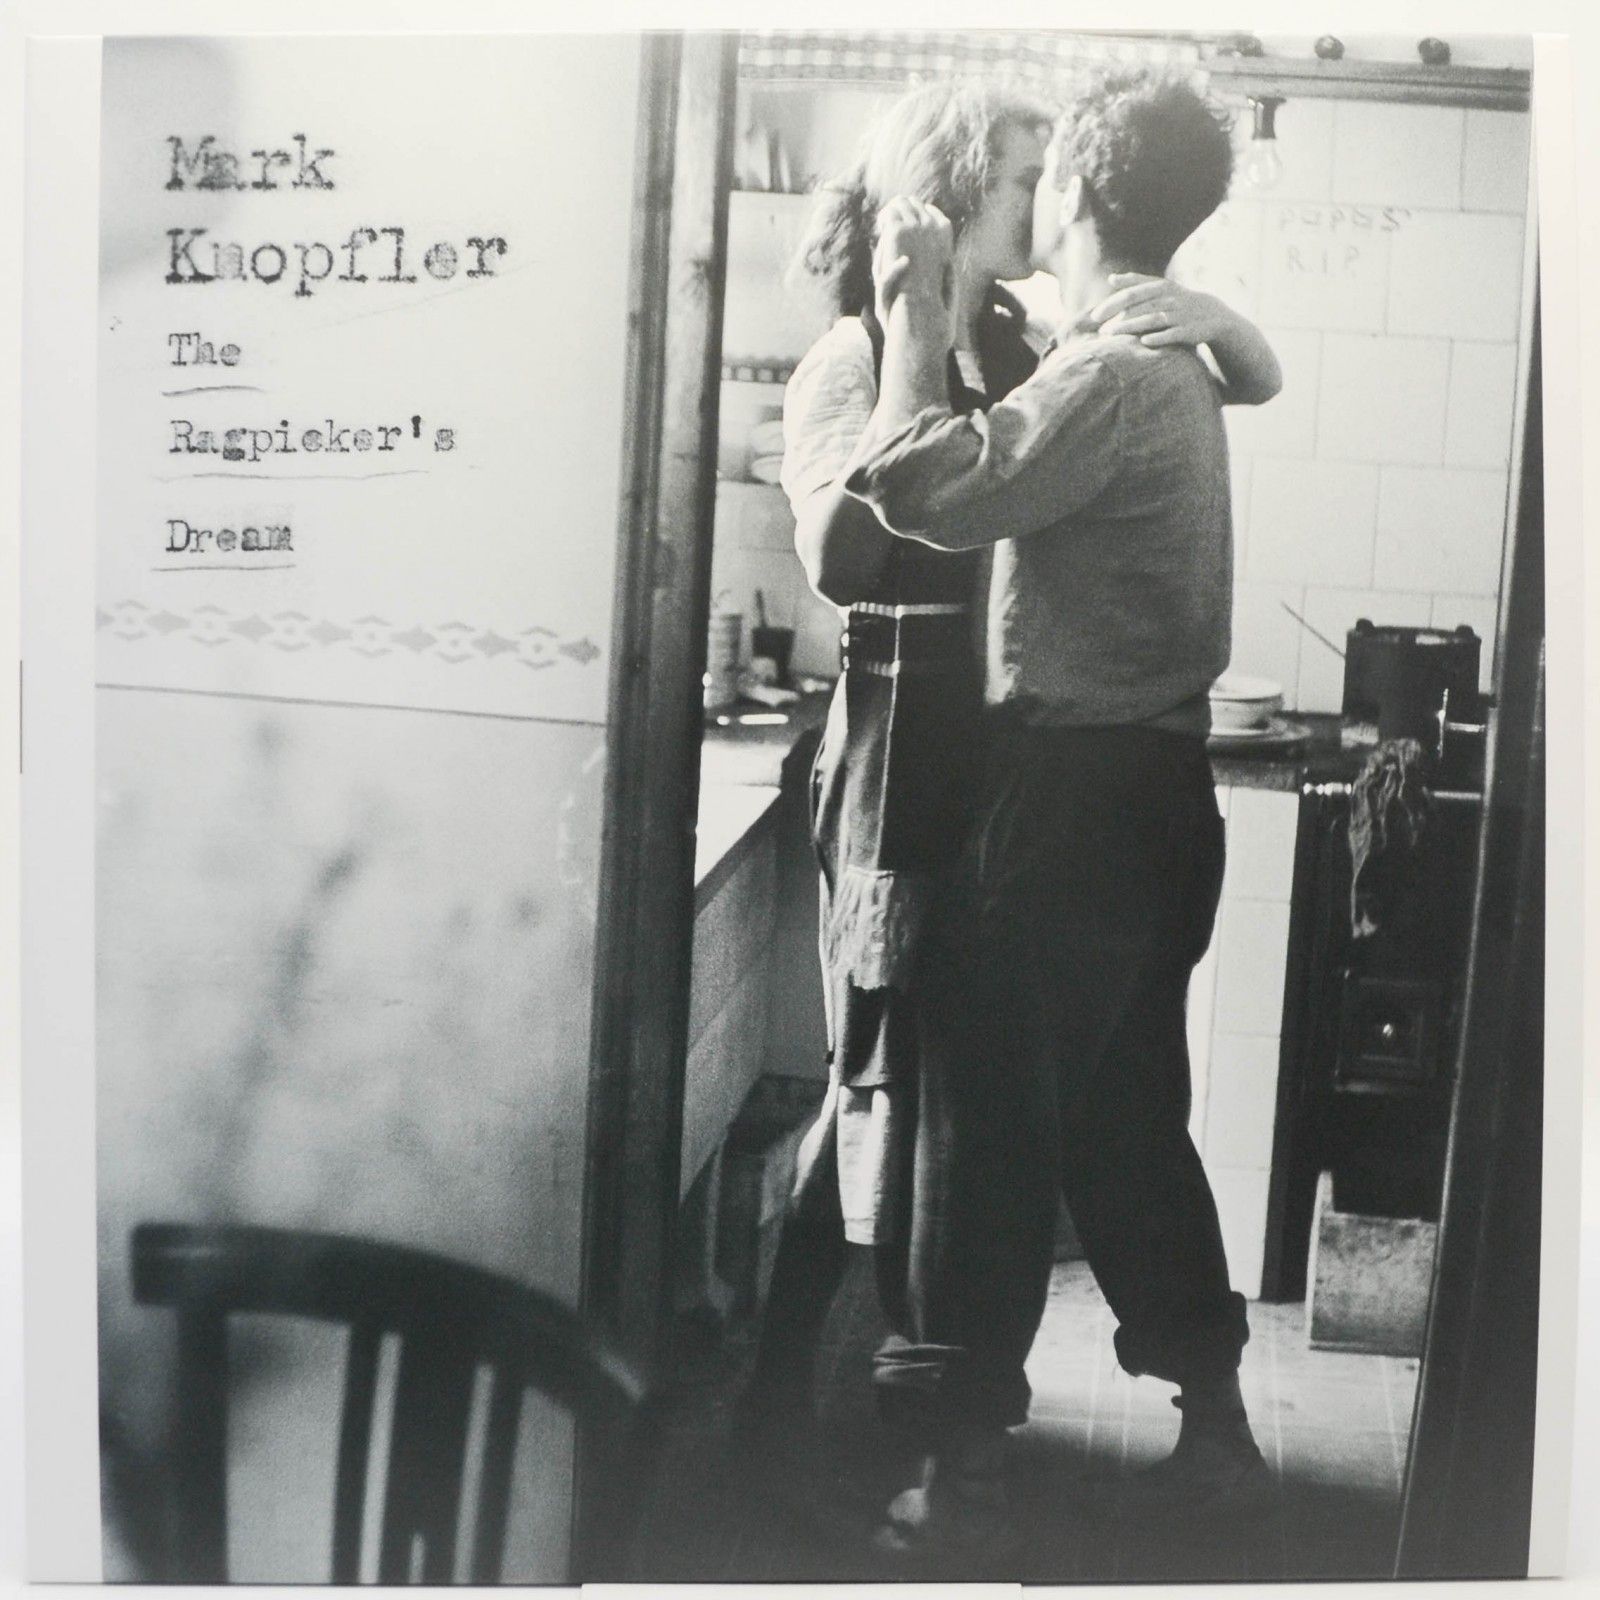 Mark Knopfler — The Ragpicker's Dream (2LP), 2002